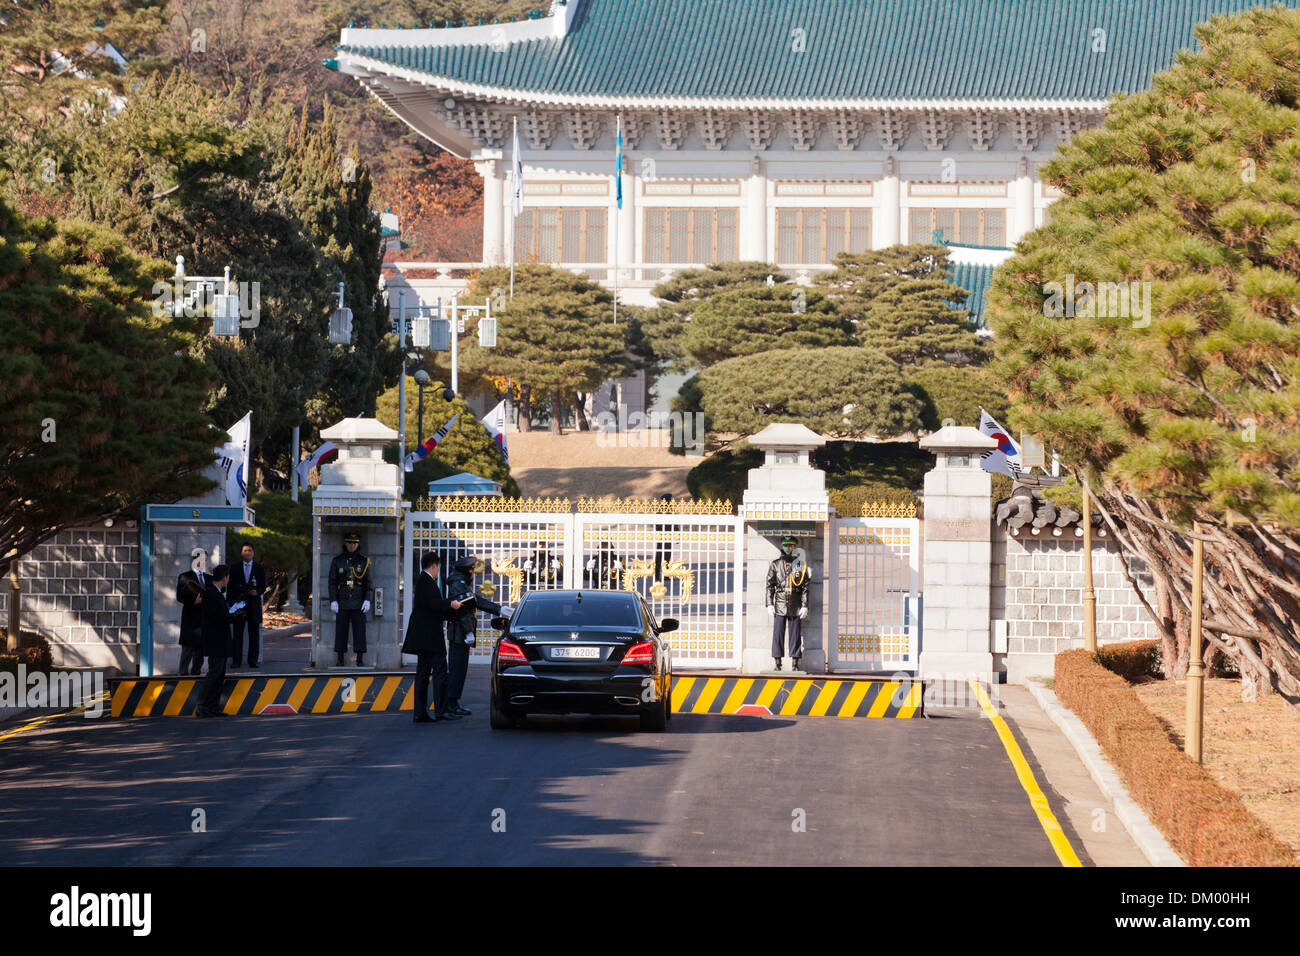 Main entrance of Cheongwadae (Blue House / Pavilion of Blue Tiles) - Seoul, South Korea Stock Photo